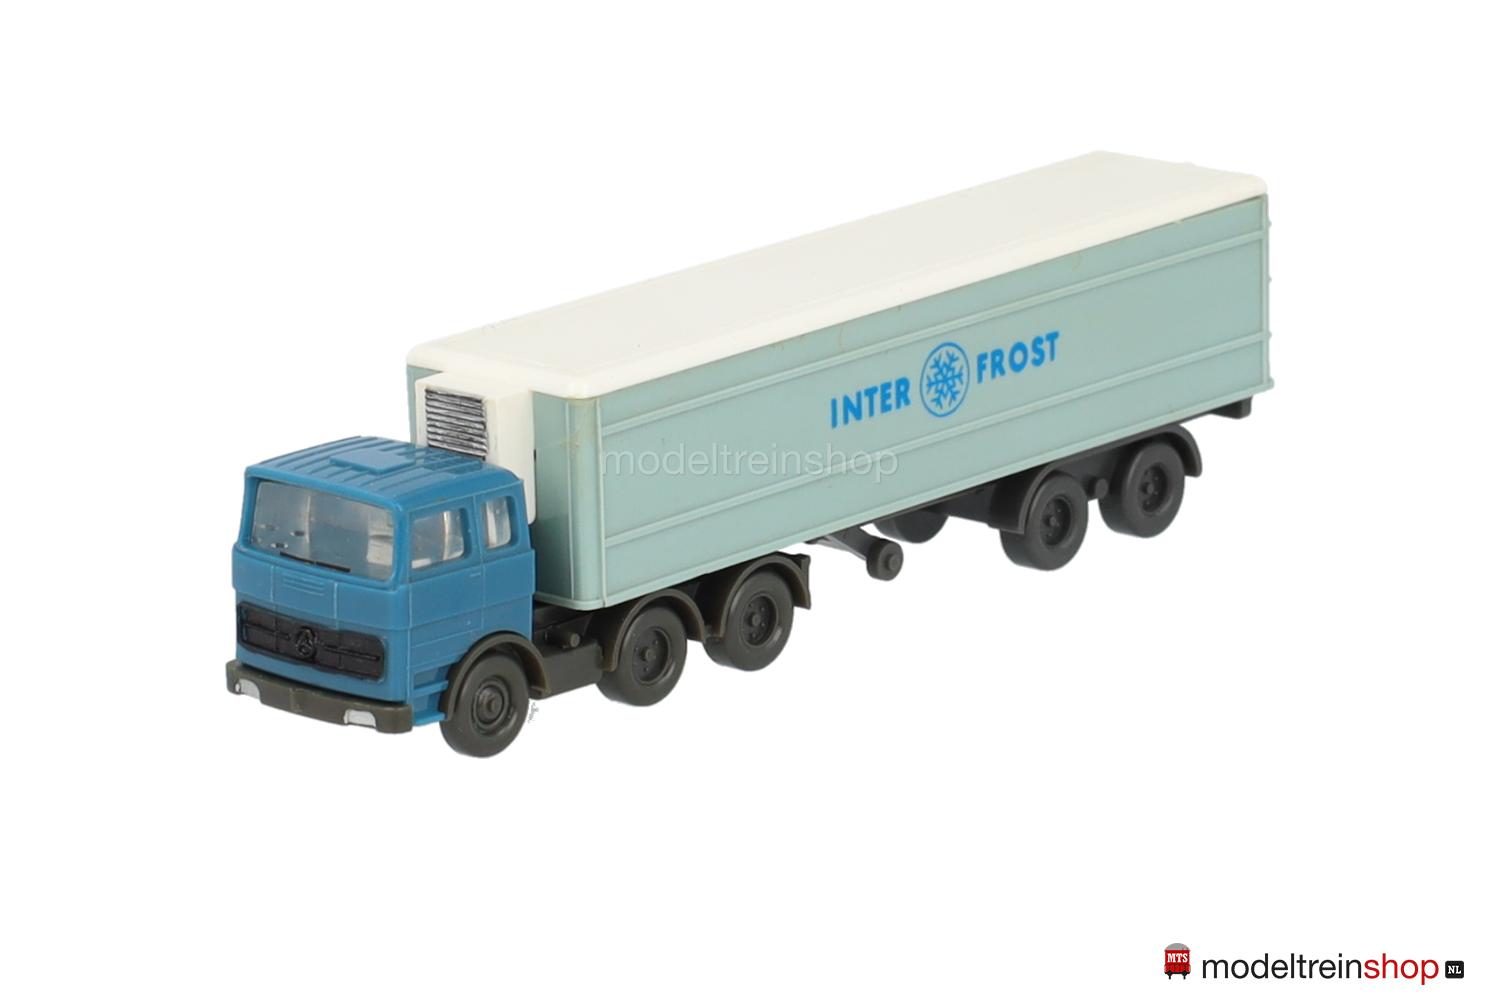 Wiking N N5K Truck Inter Frost - Modeltreinshop